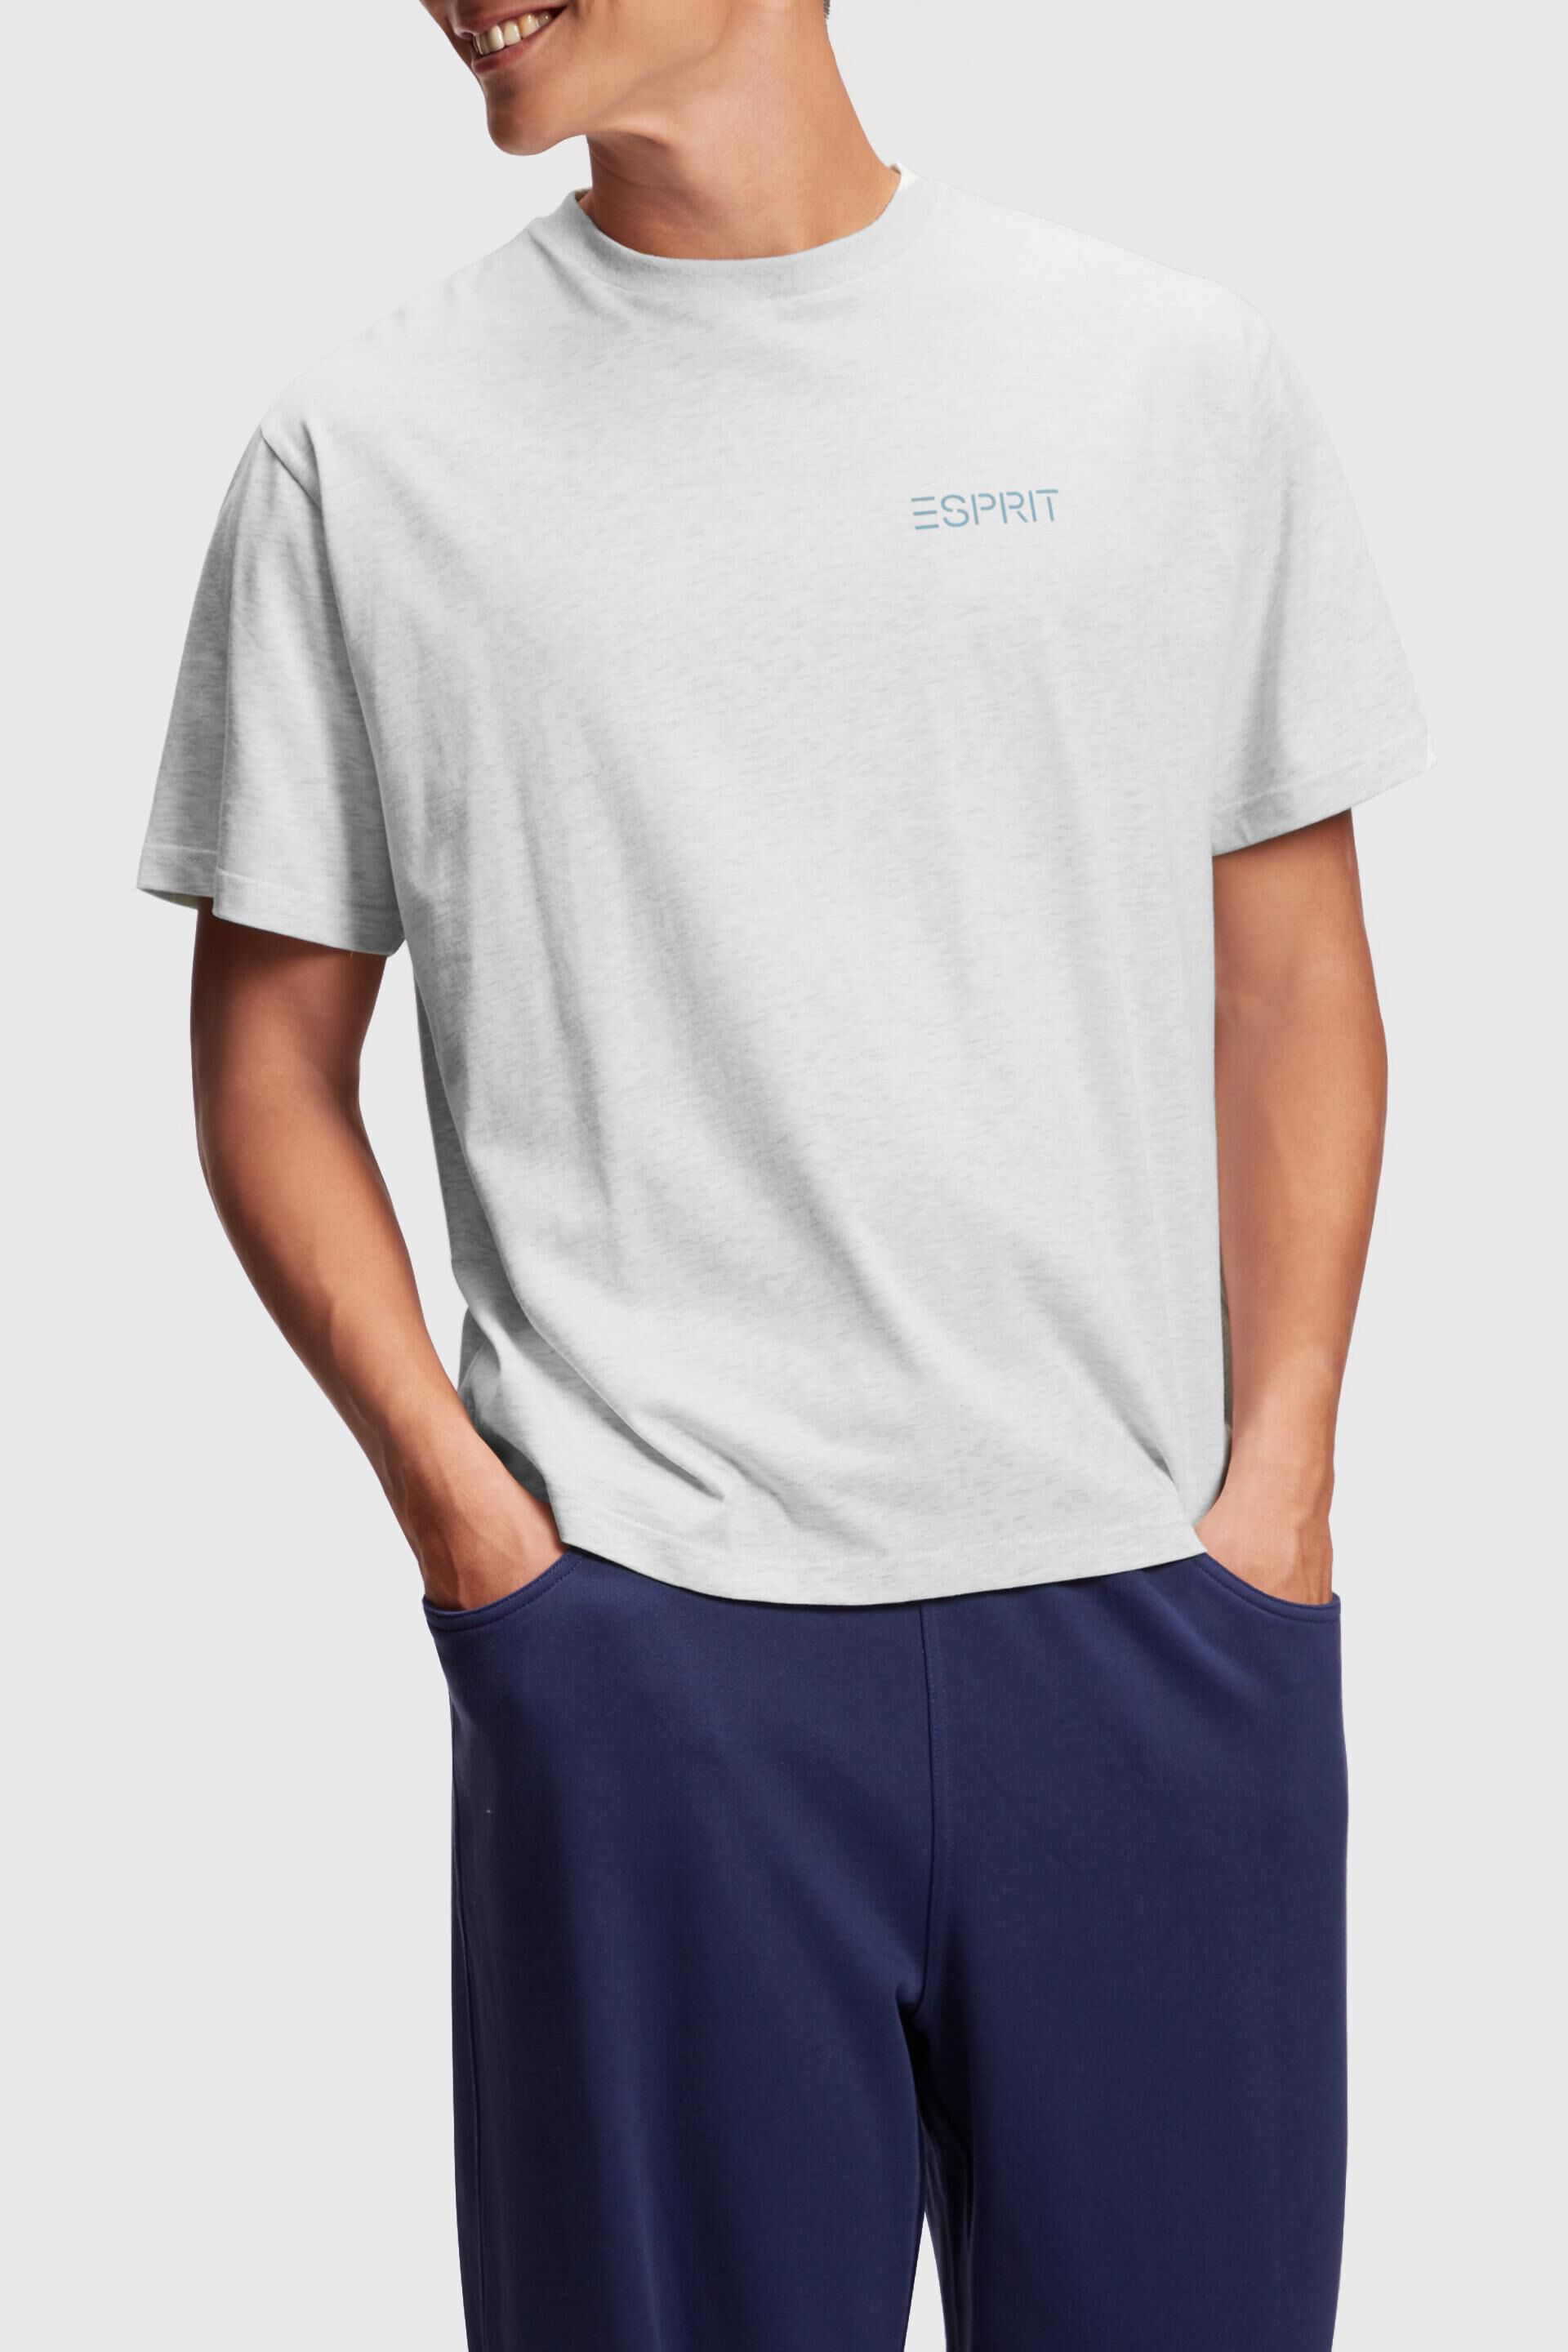 Esprit print Seoul Edition t-shirt